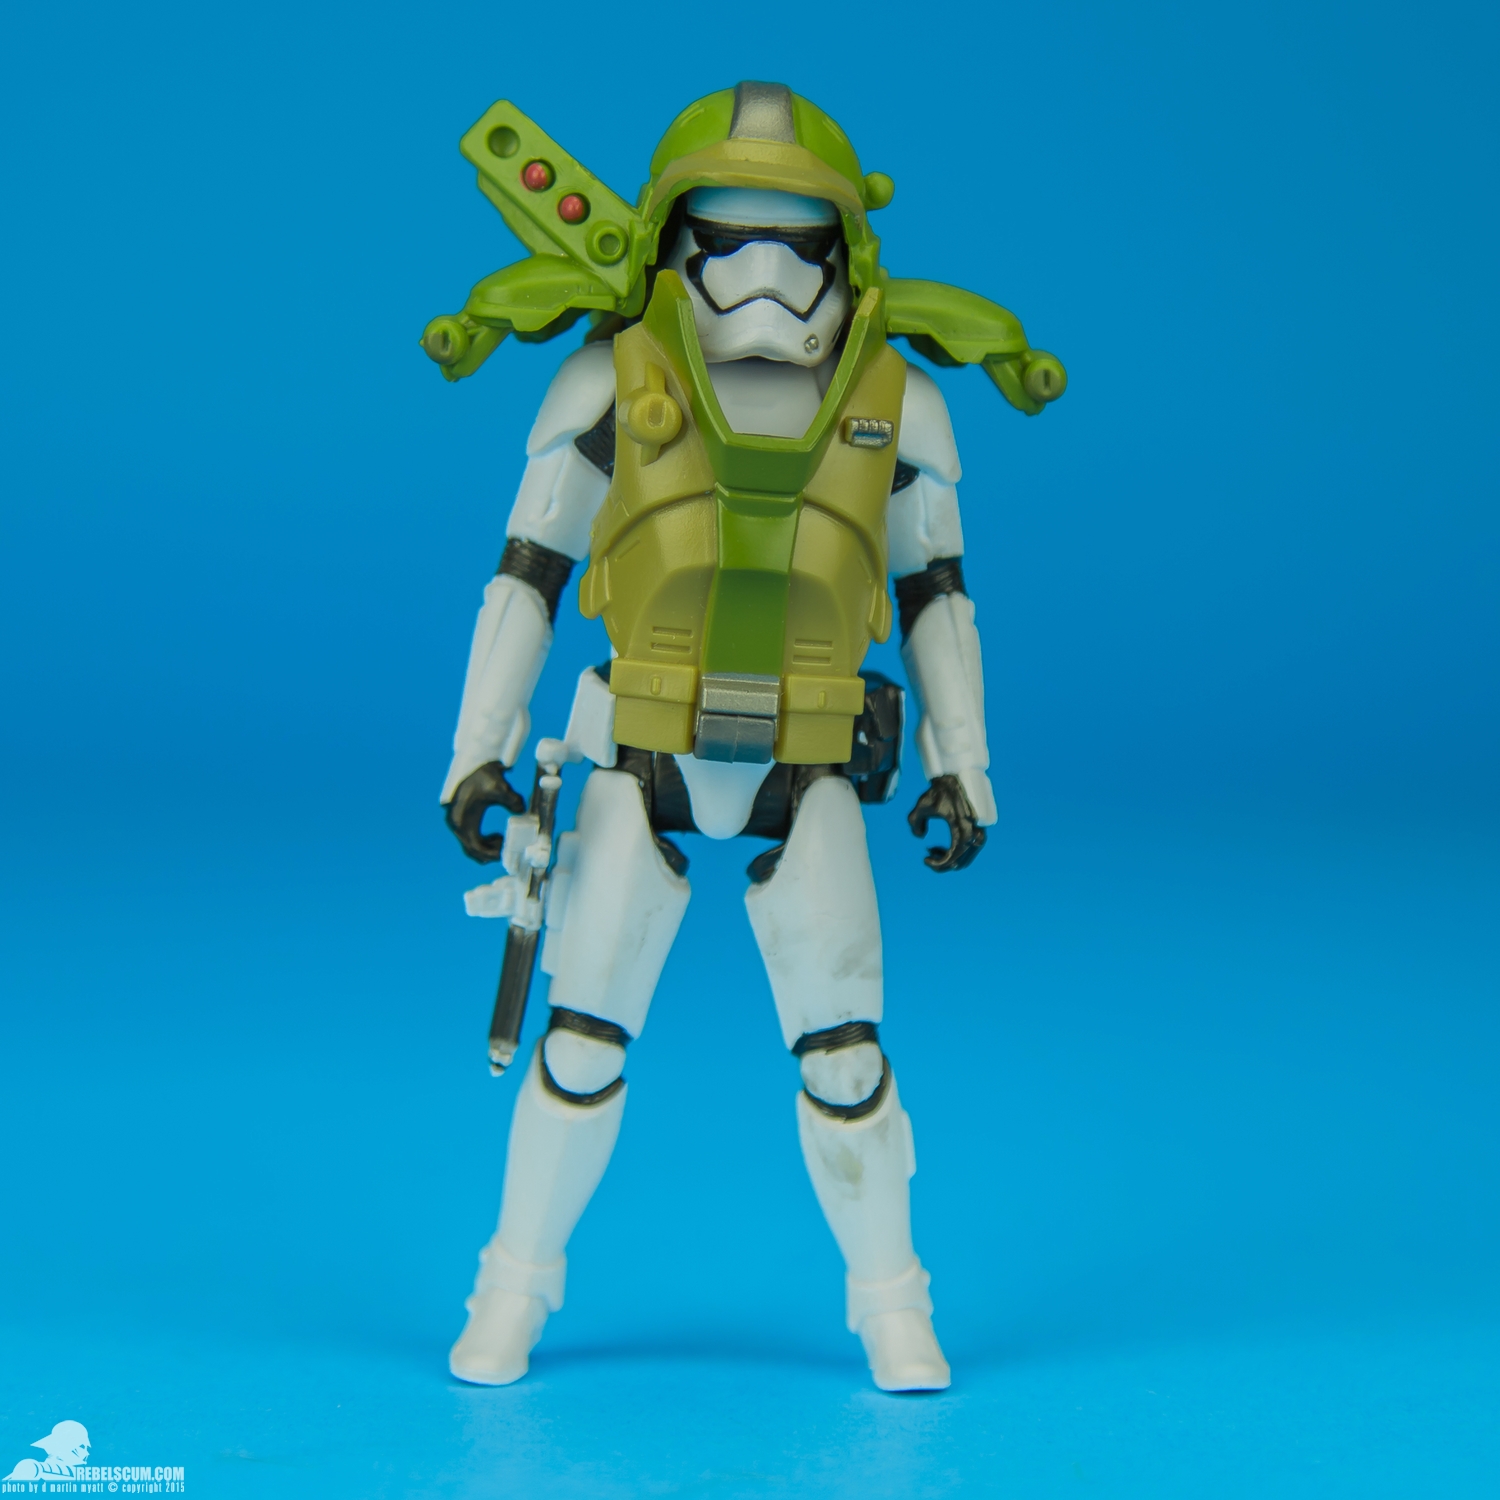 Armor-Up-First-Order-Stormtrooper-The-Force-Awakens-005.jpg